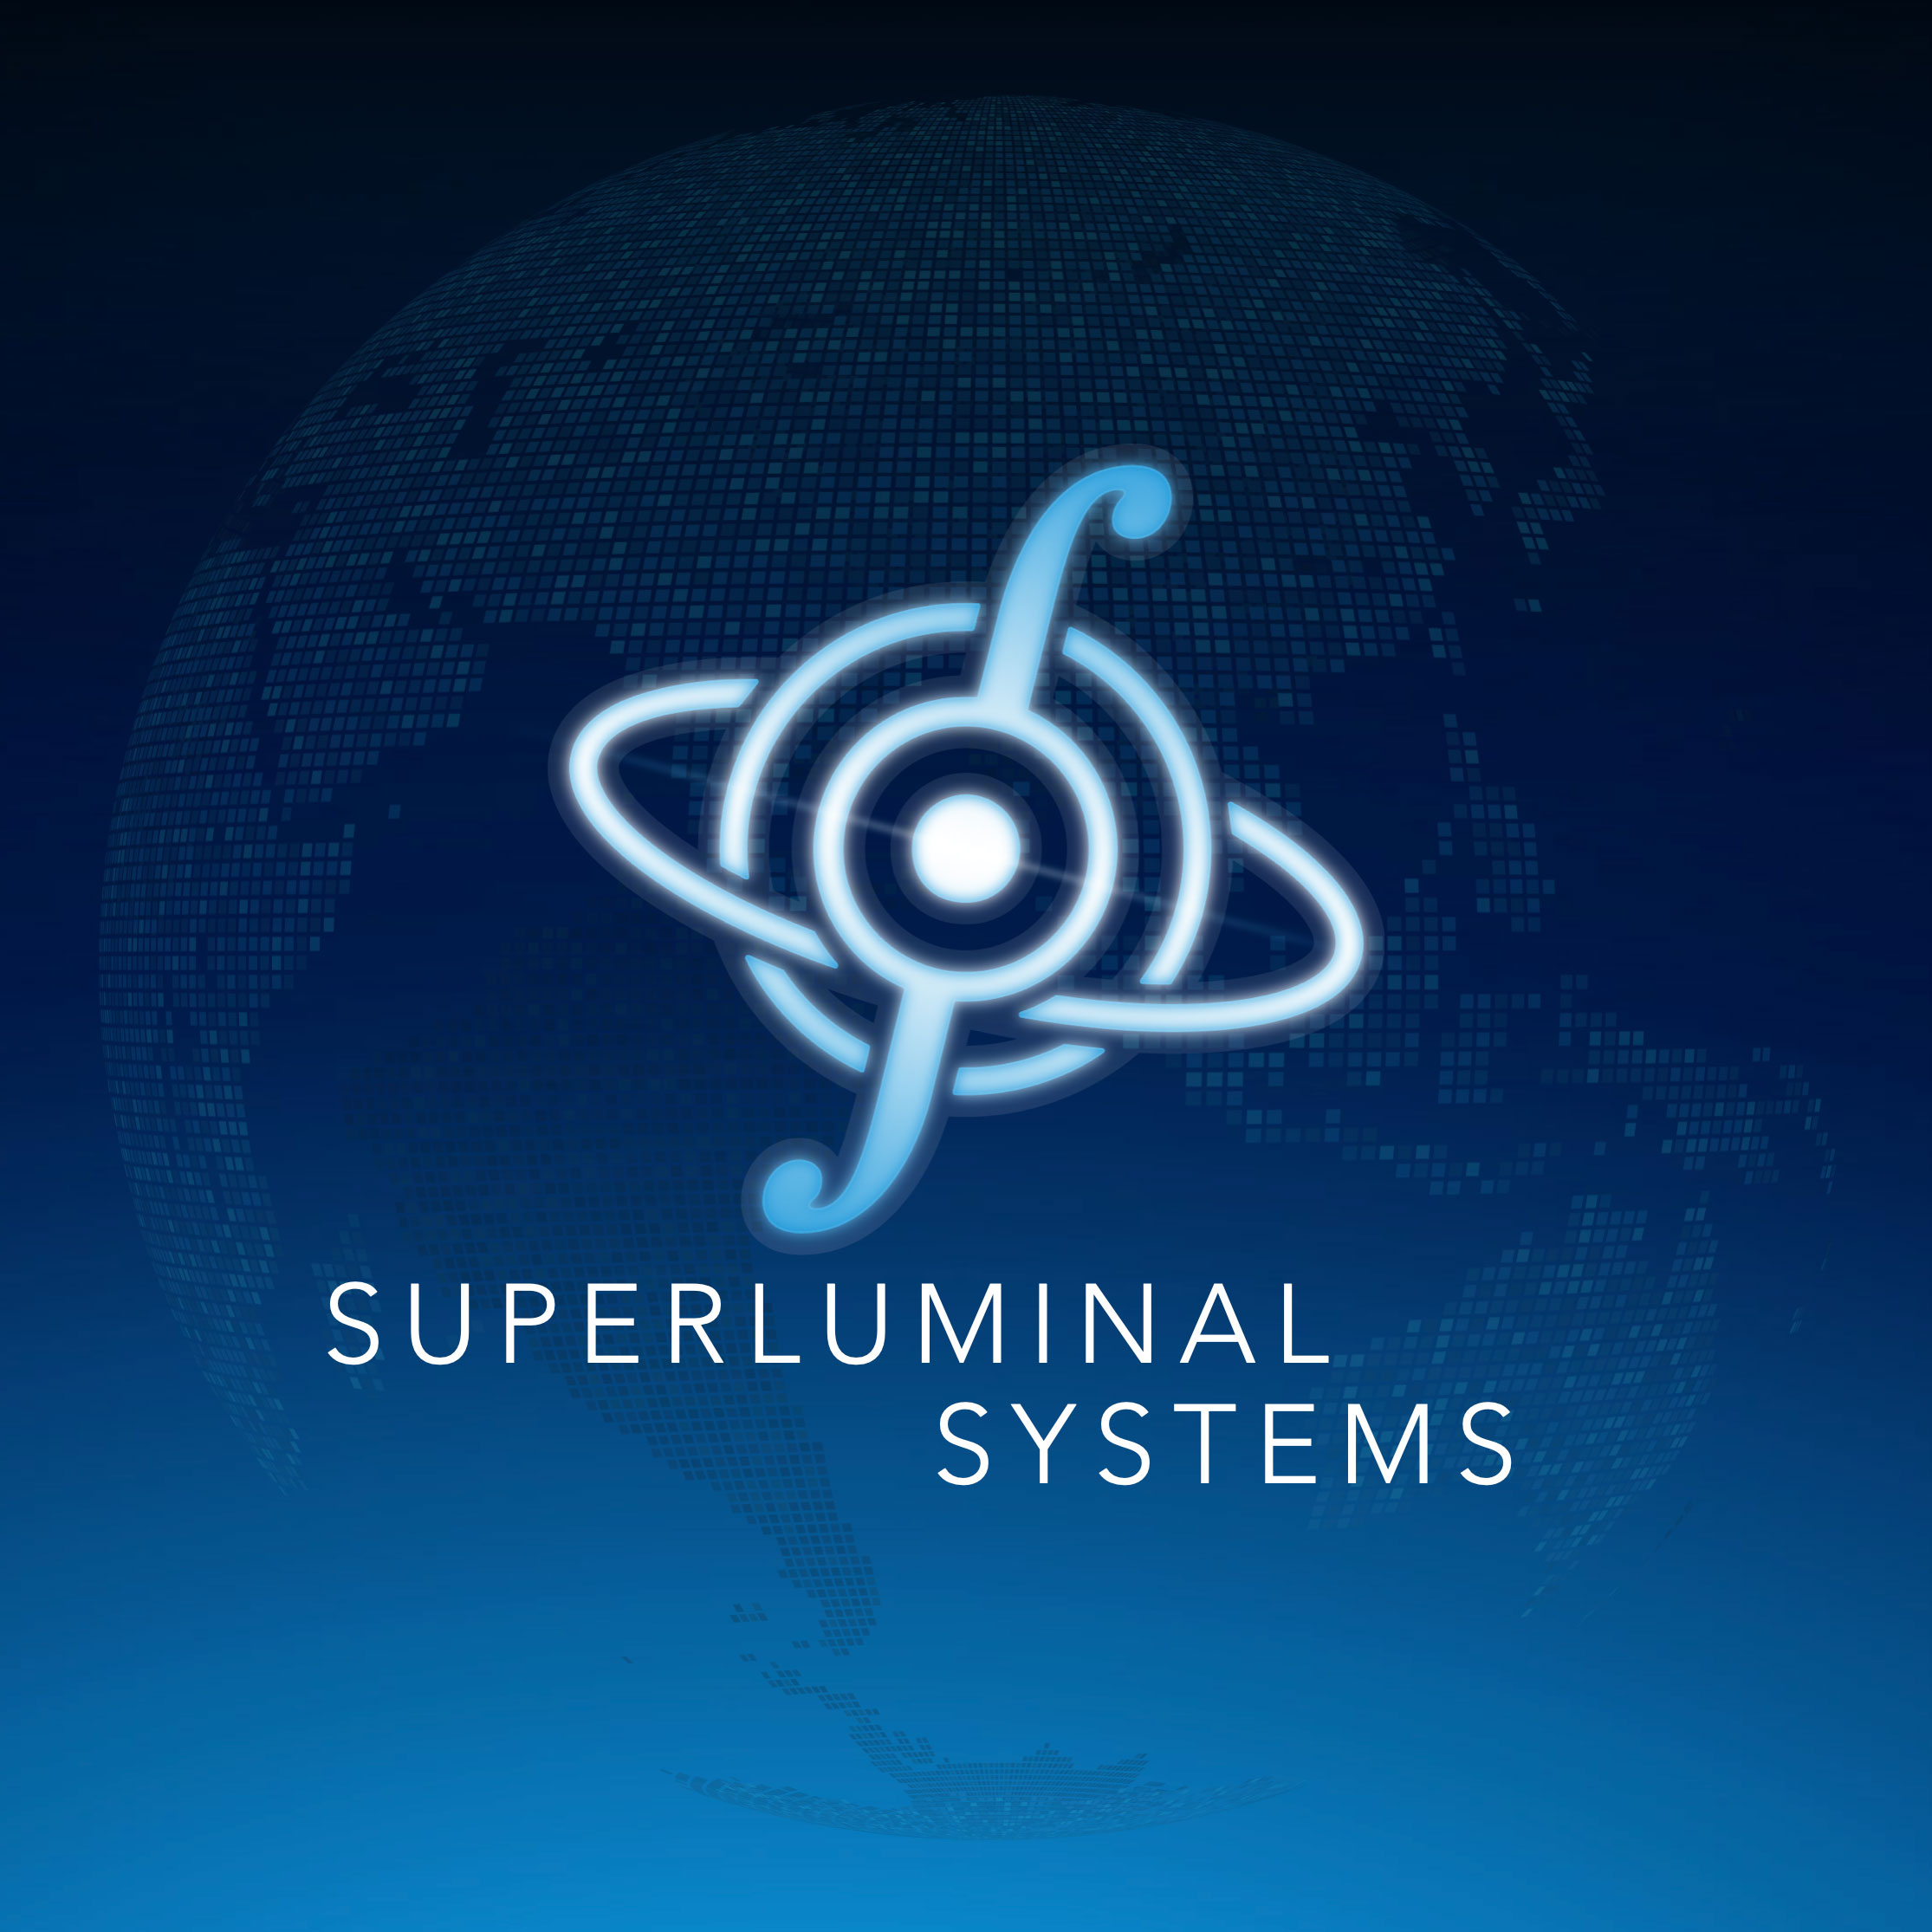 Superluminal Systems